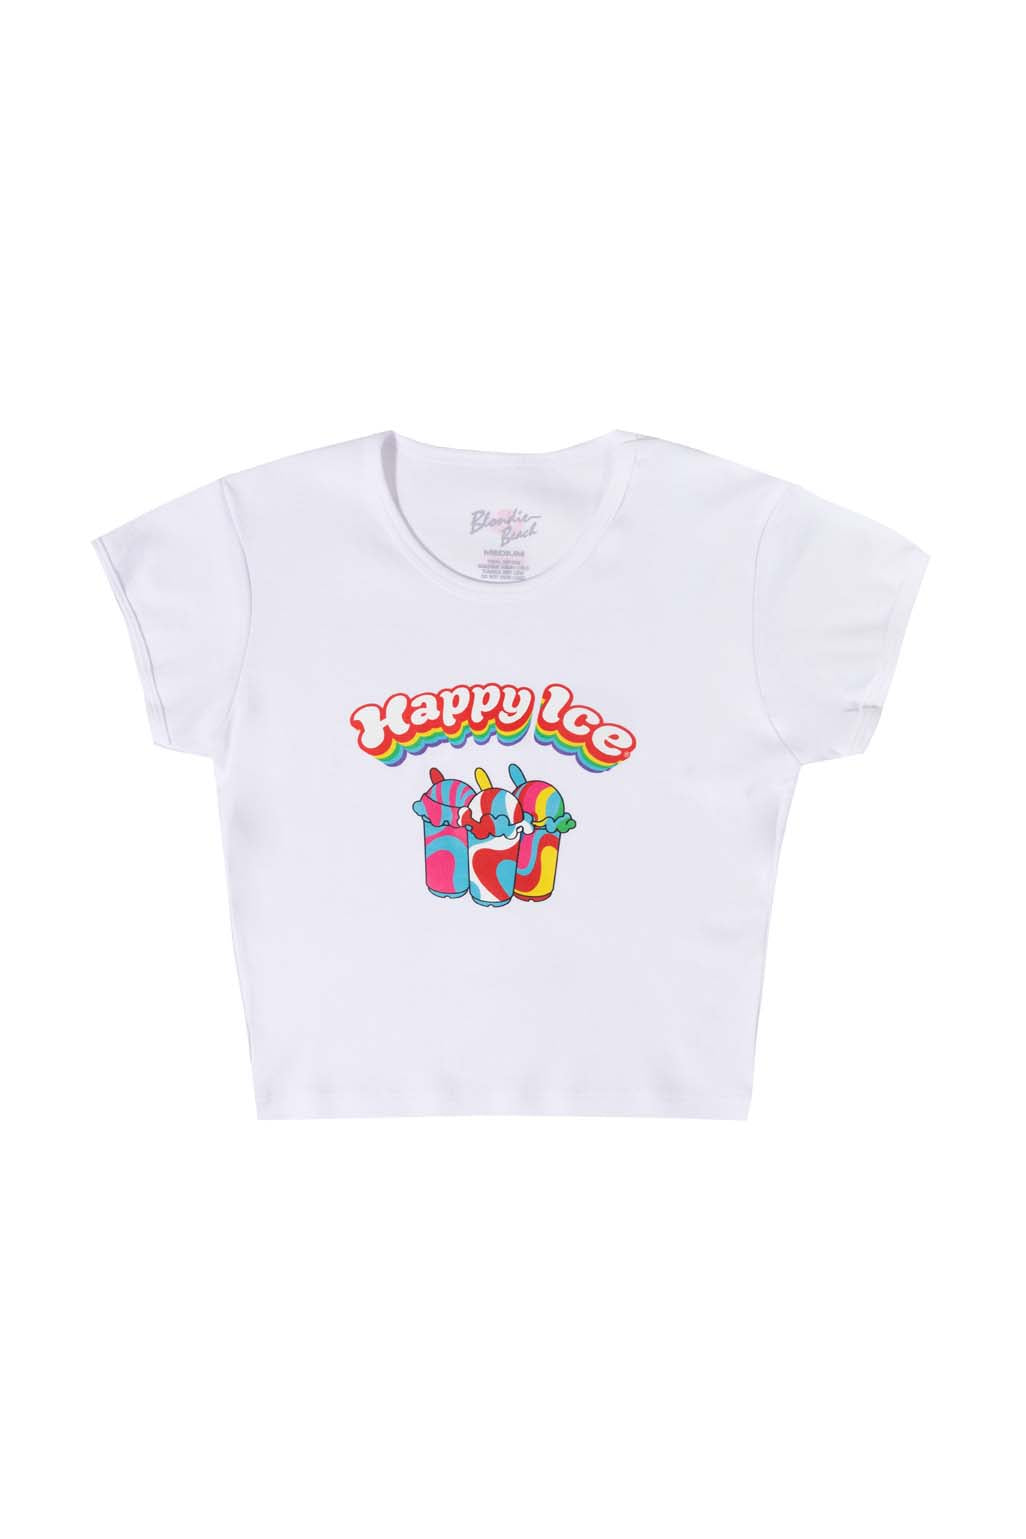 Happy Ice Baby T-Shirt